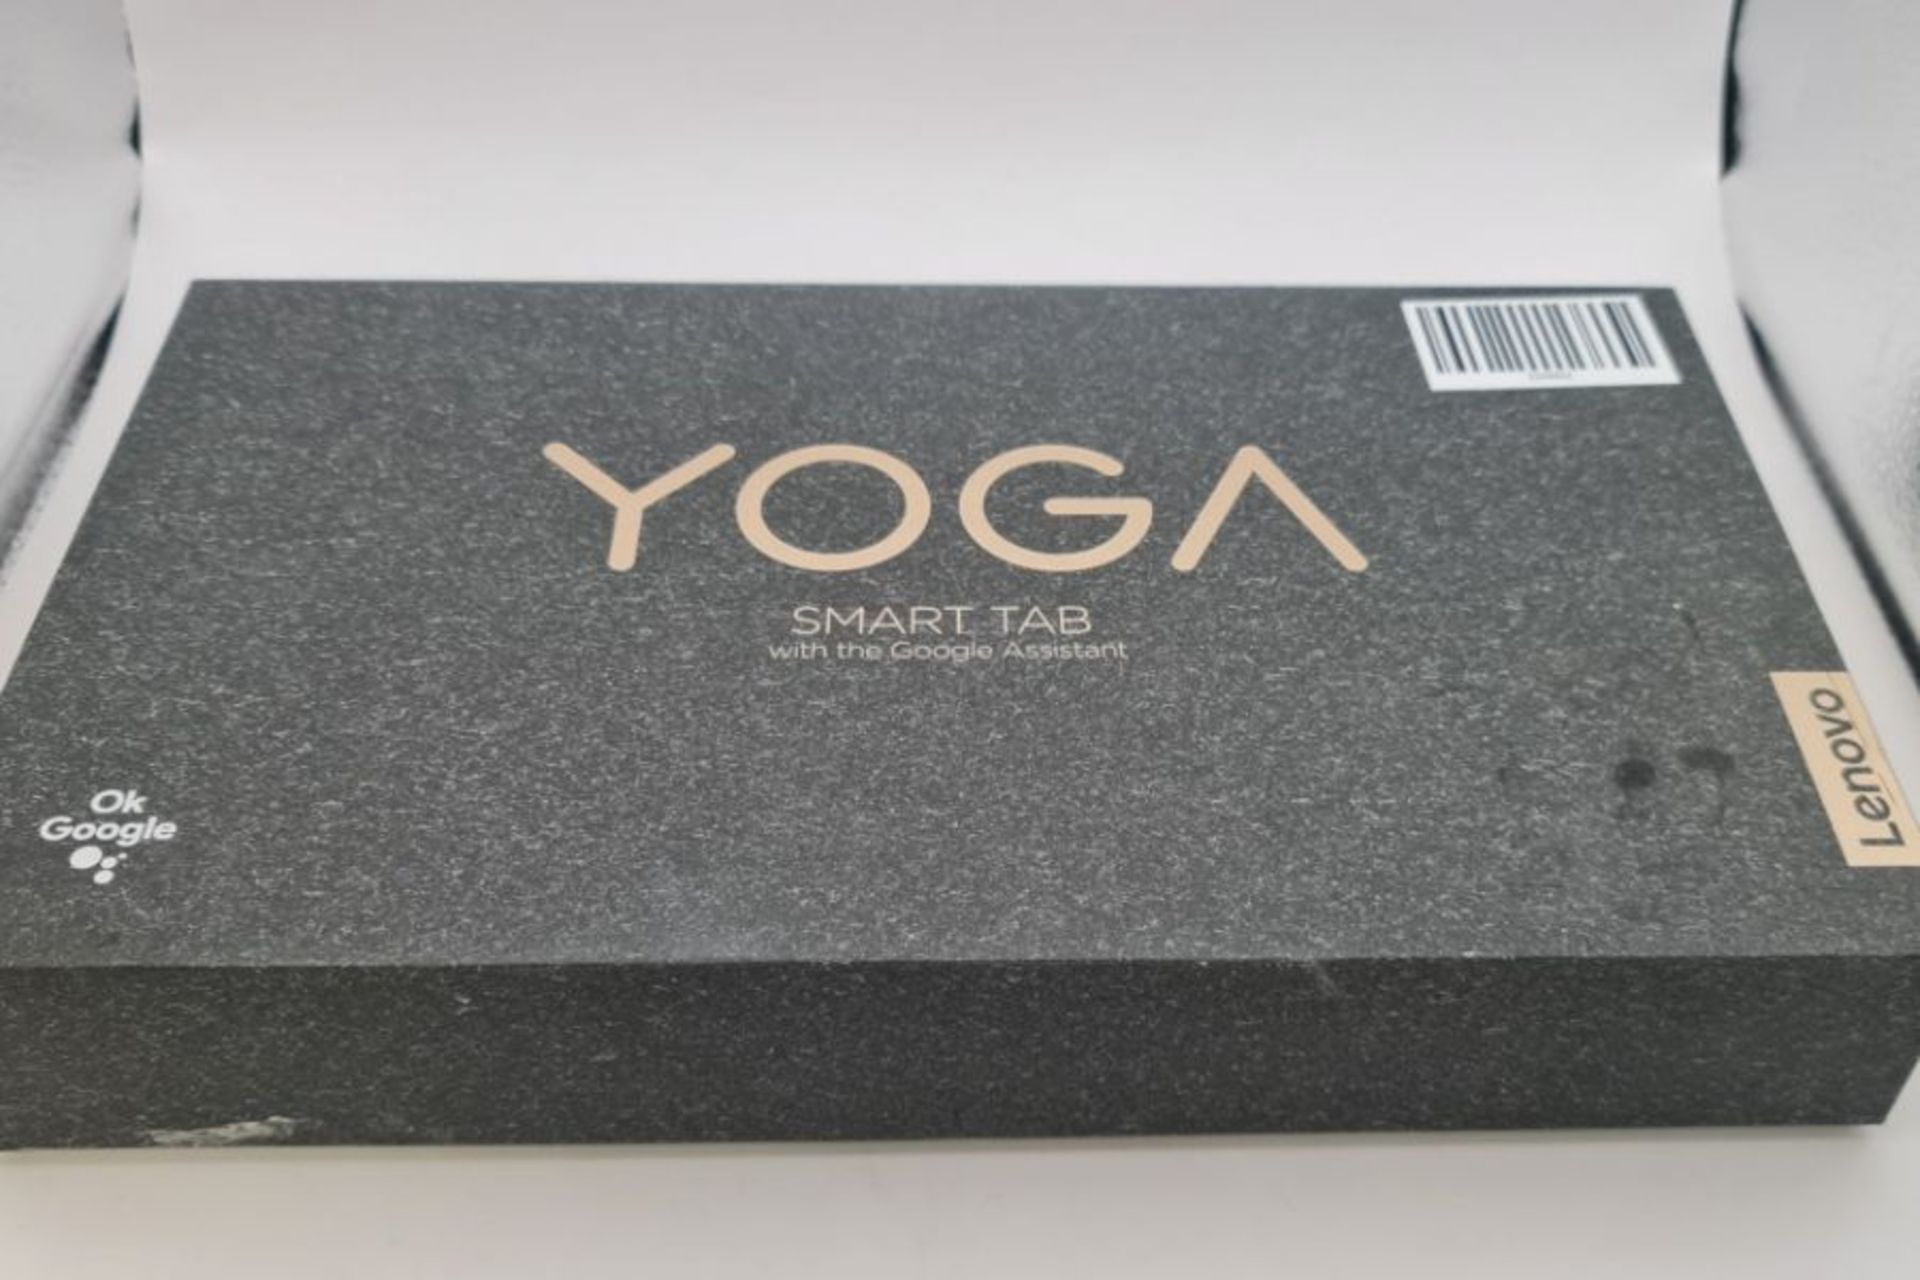 Lenovo Yoga Smart Tab with Google Assistant YT-X705F, 3GB RAM, 32GB Storage, Iron Grey. Used, boxed